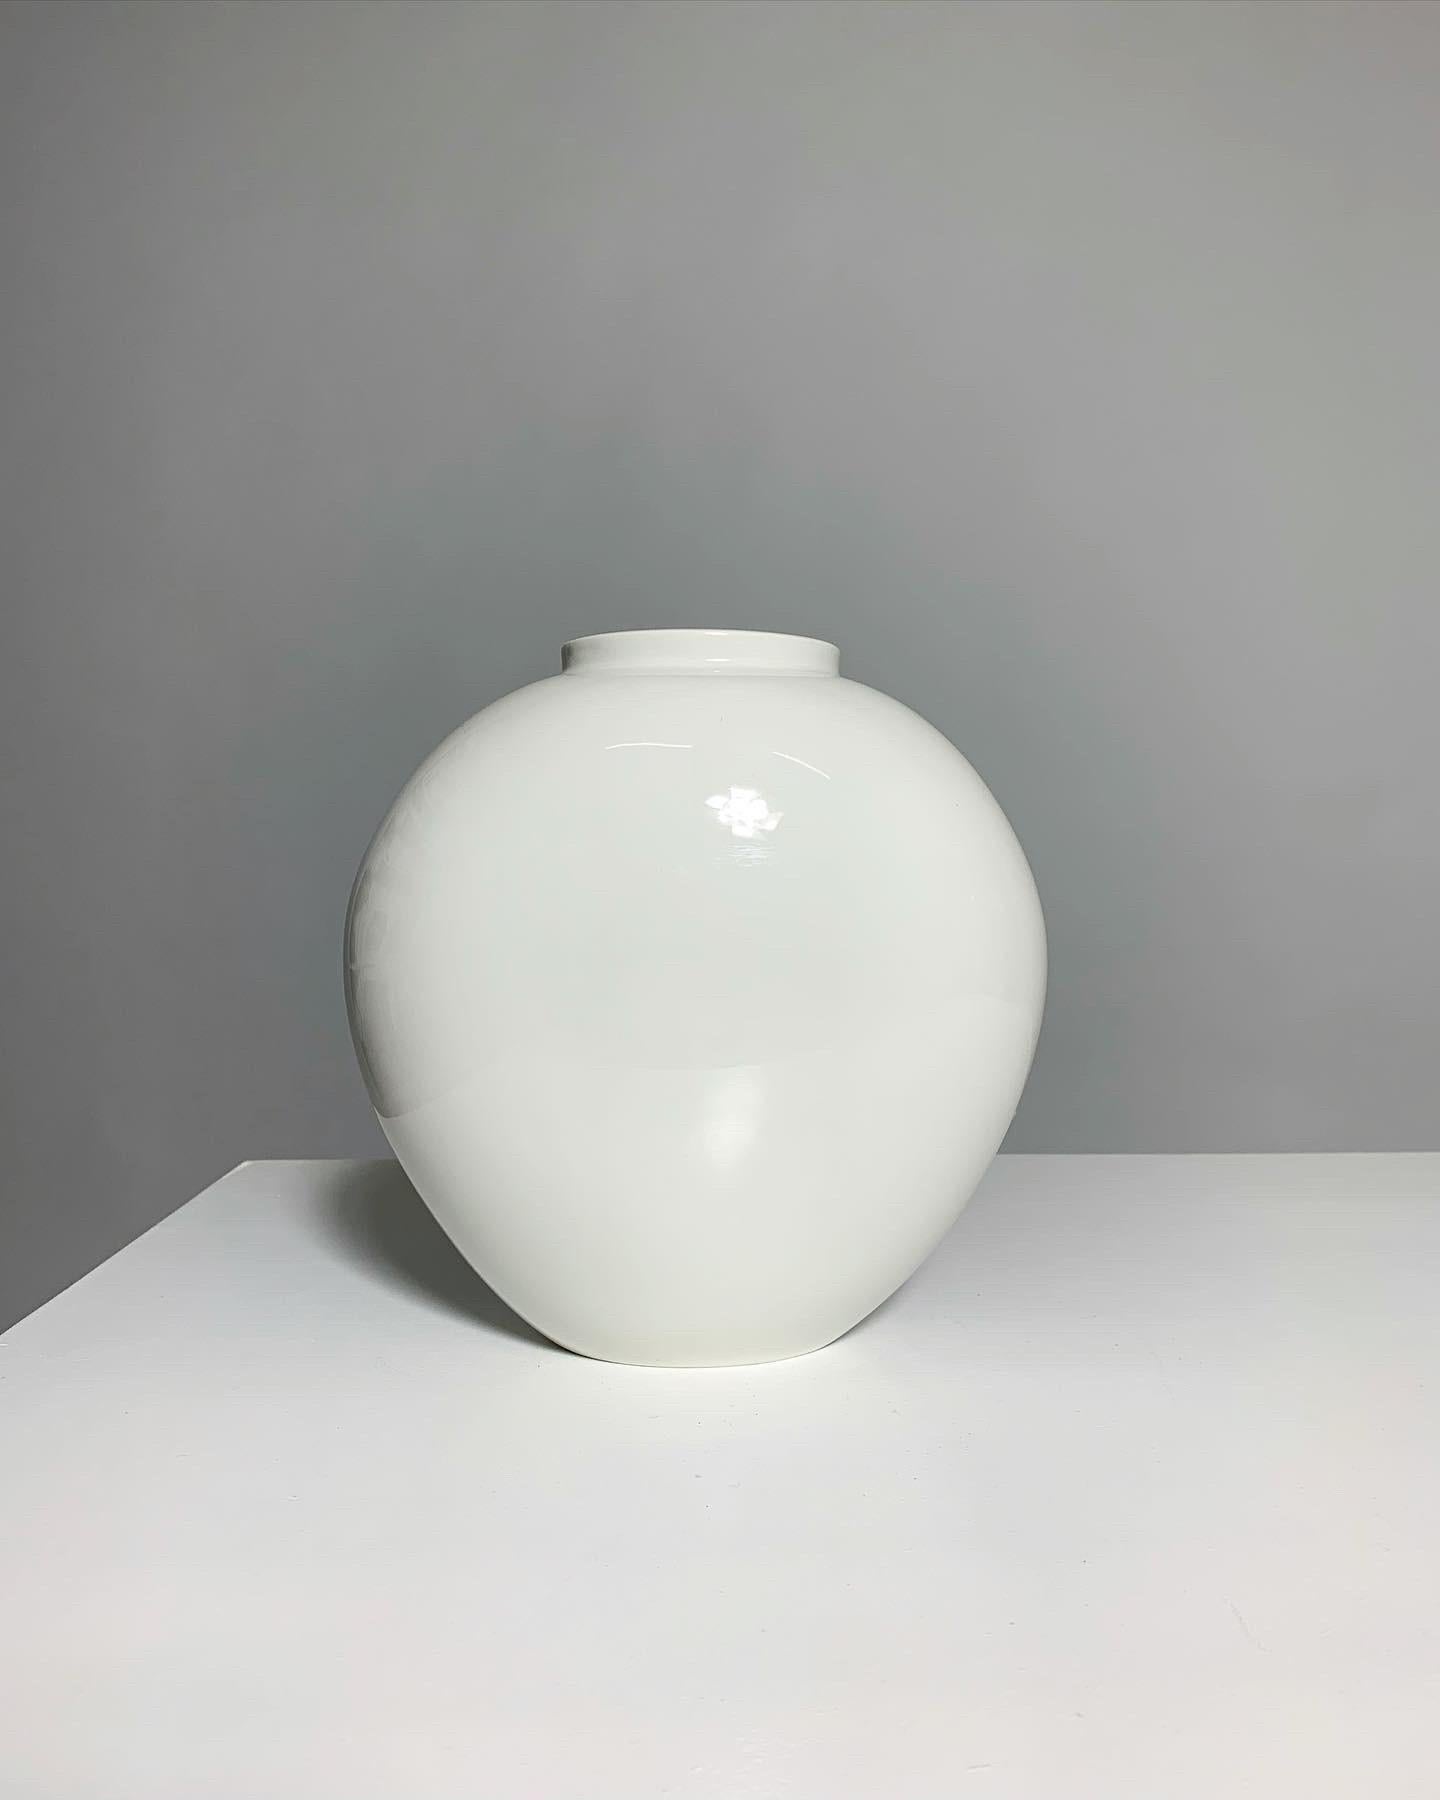 Hand-Crafted Trude Petri Heart Shaped Porcelain Vase KPM Berlin 1930s Bauhaus Design